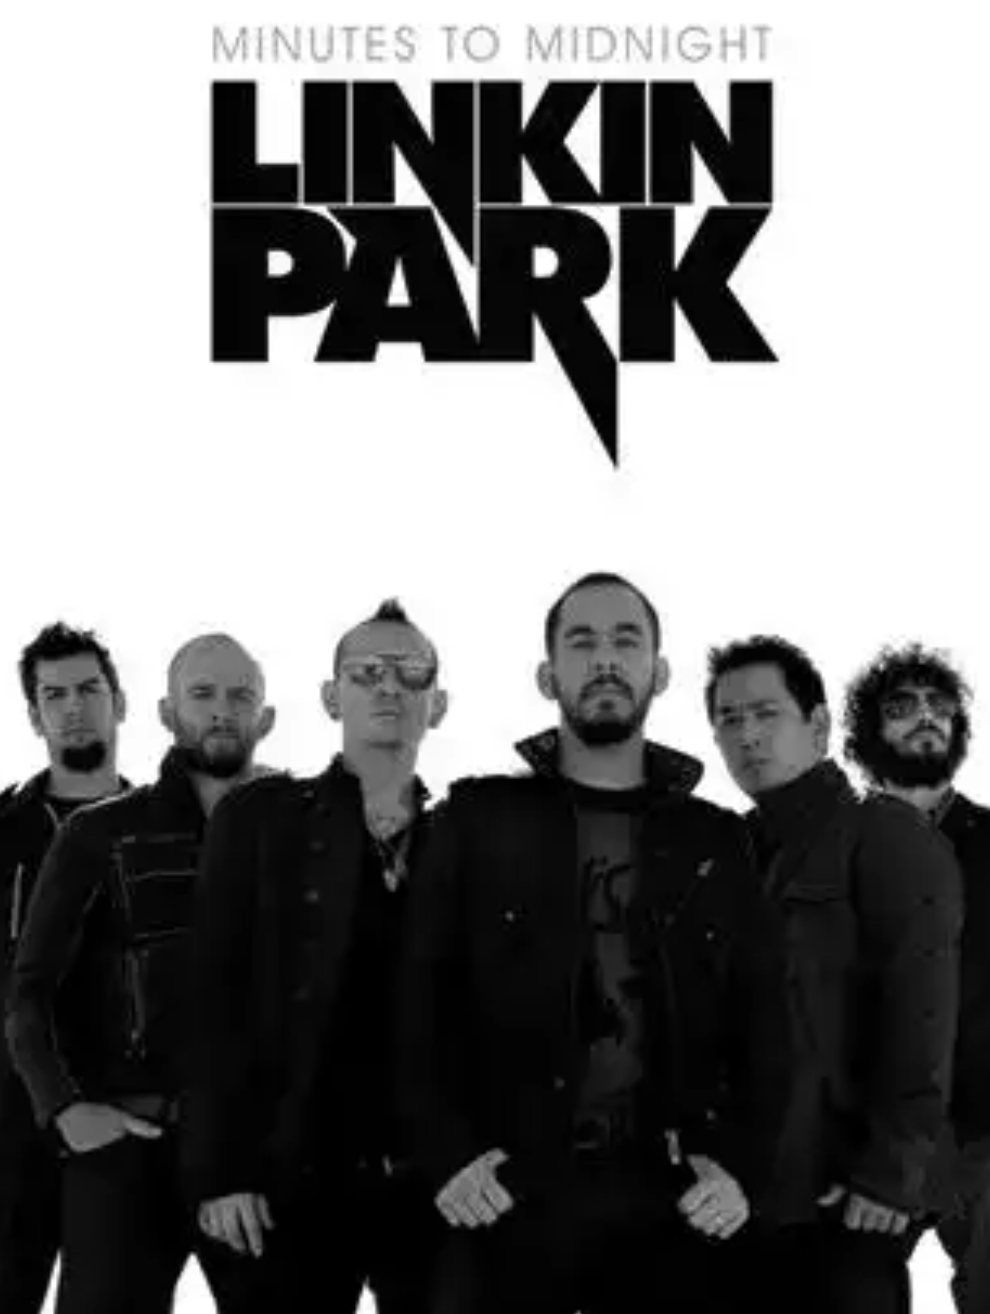 Linkin park rest